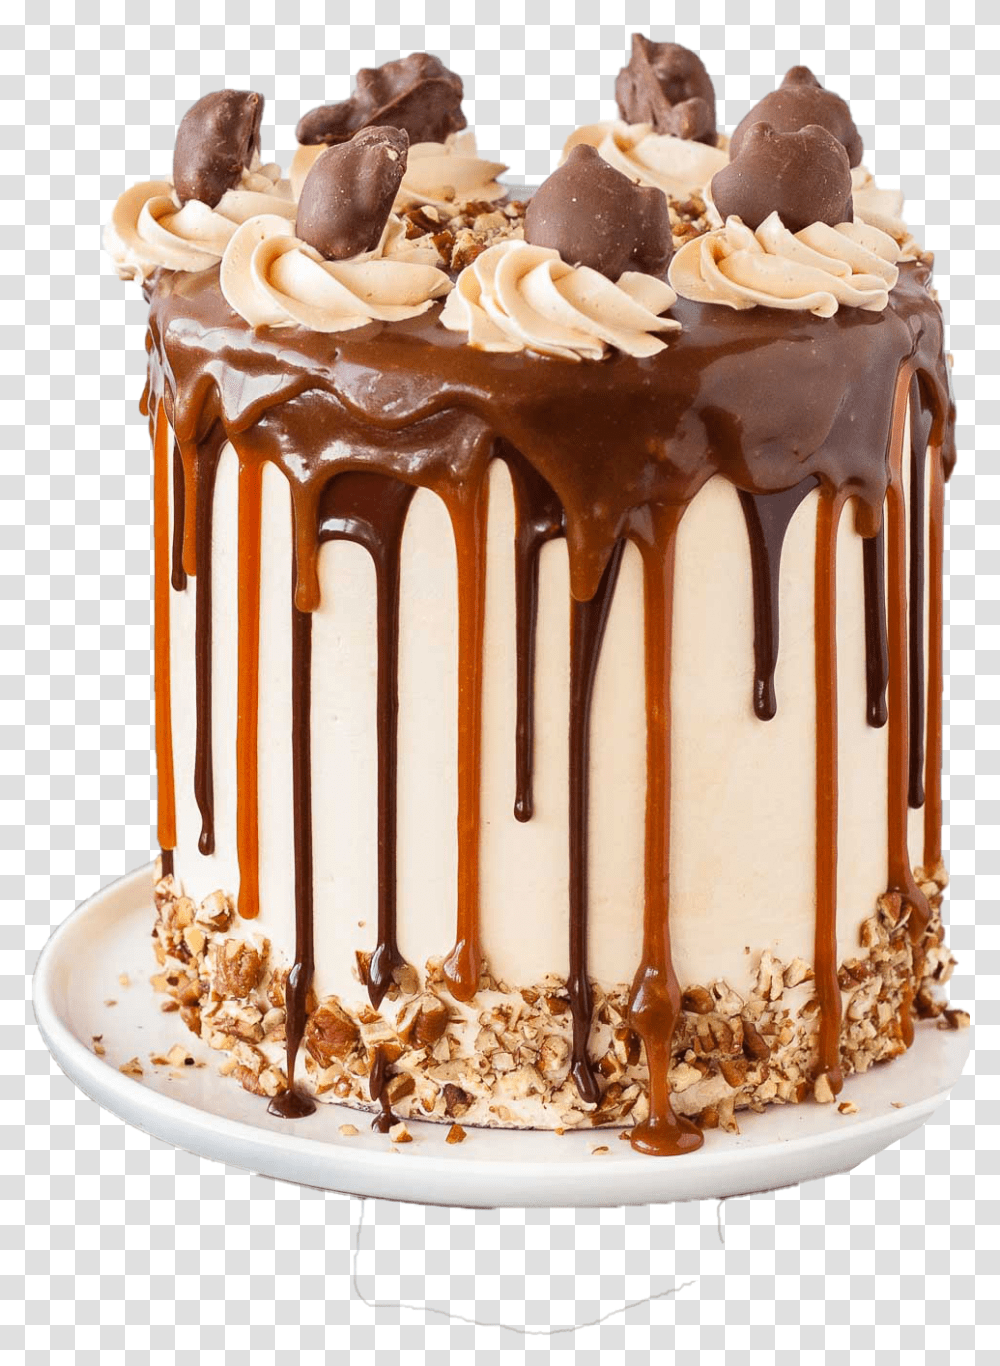 Caramel Cake Free Images Caramel And Chocolate Drip Cake, Dessert, Food, Birthday Cake, Sweets Transparent Png